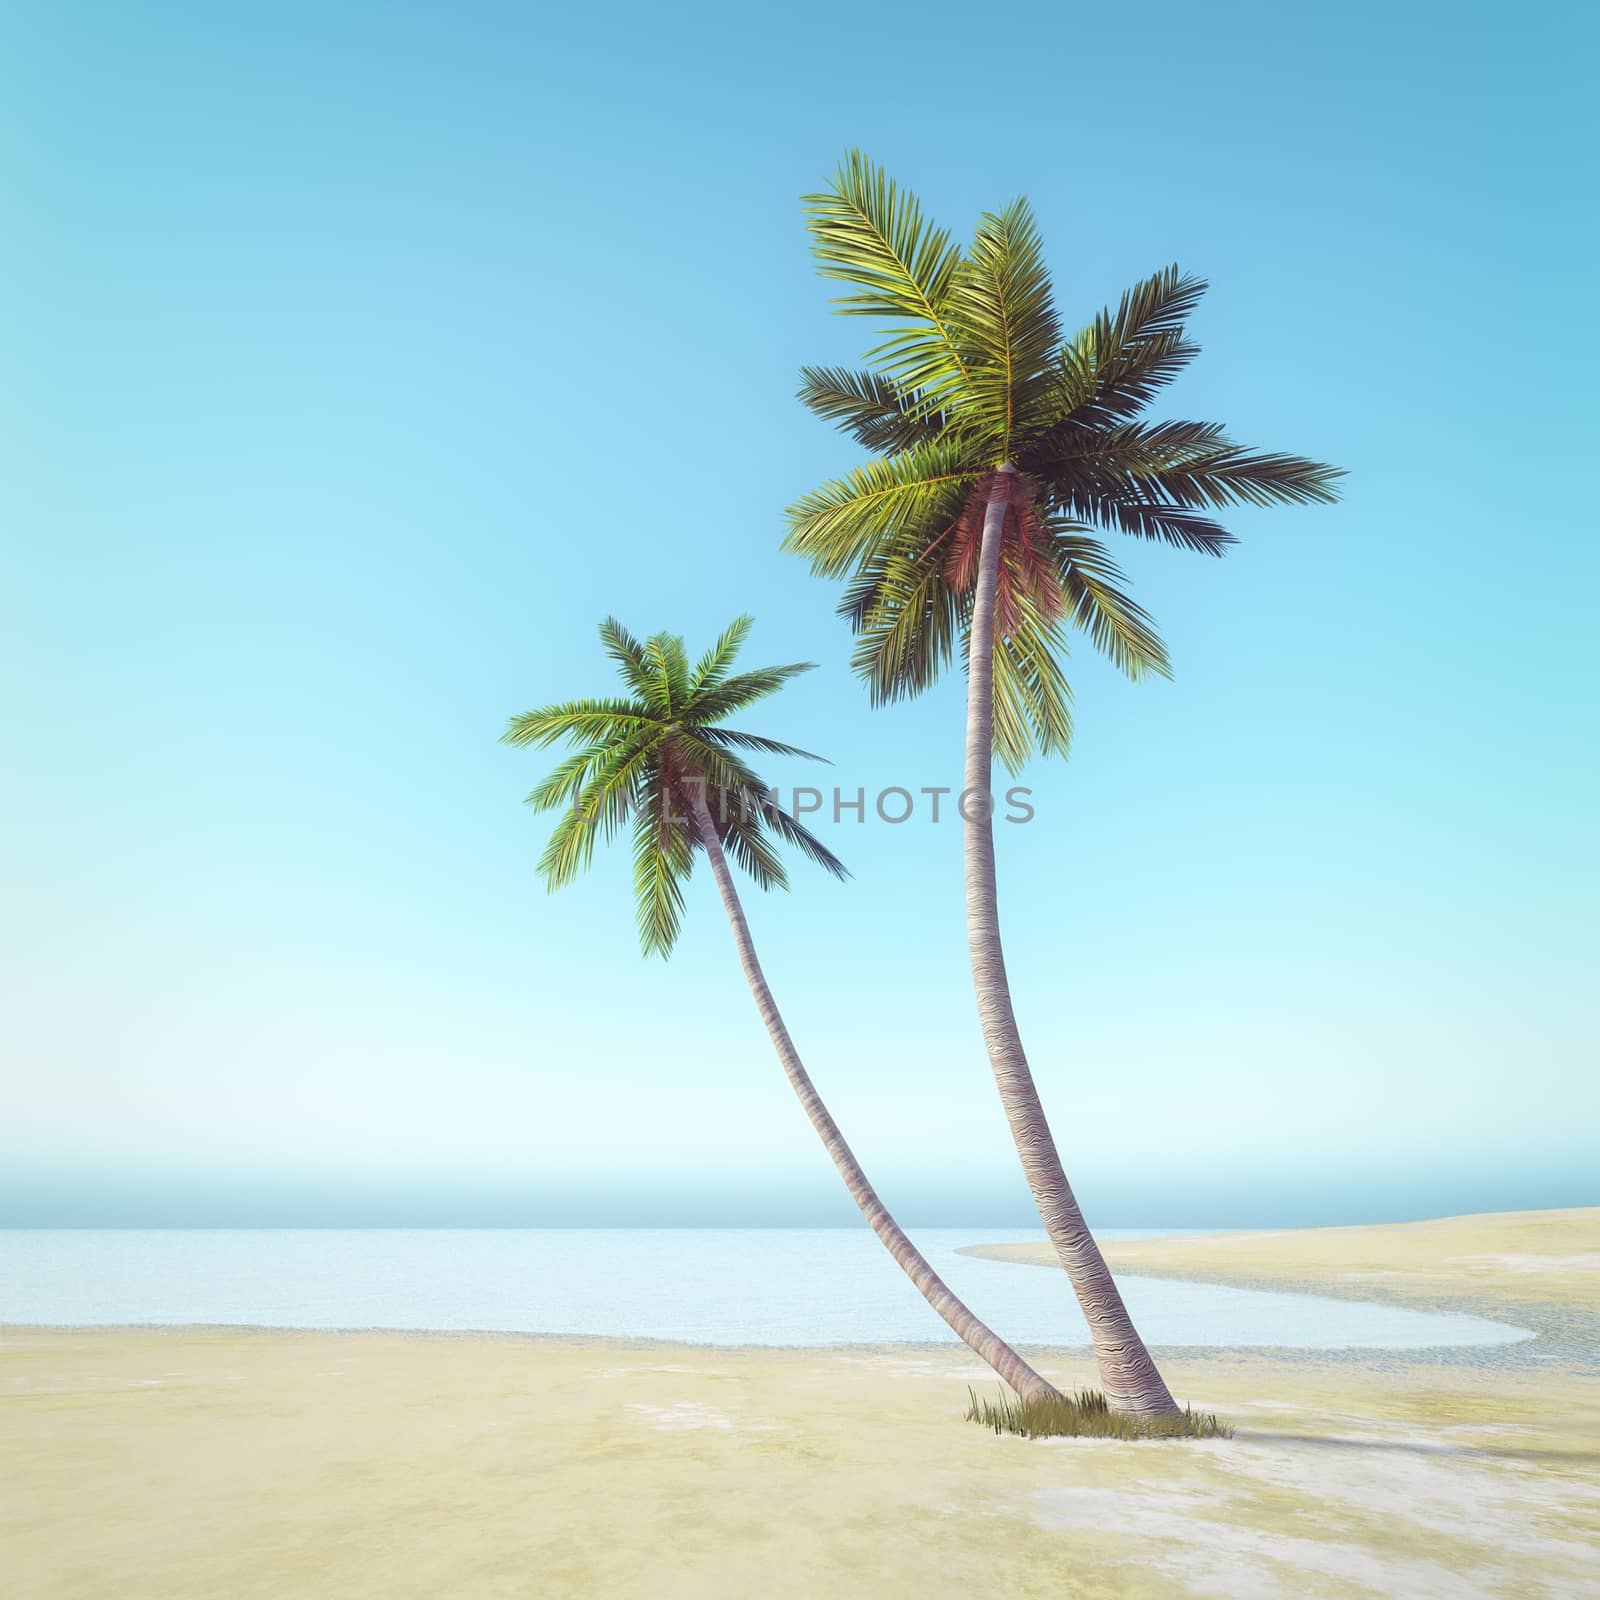 An image of a beautiful palm tree beach